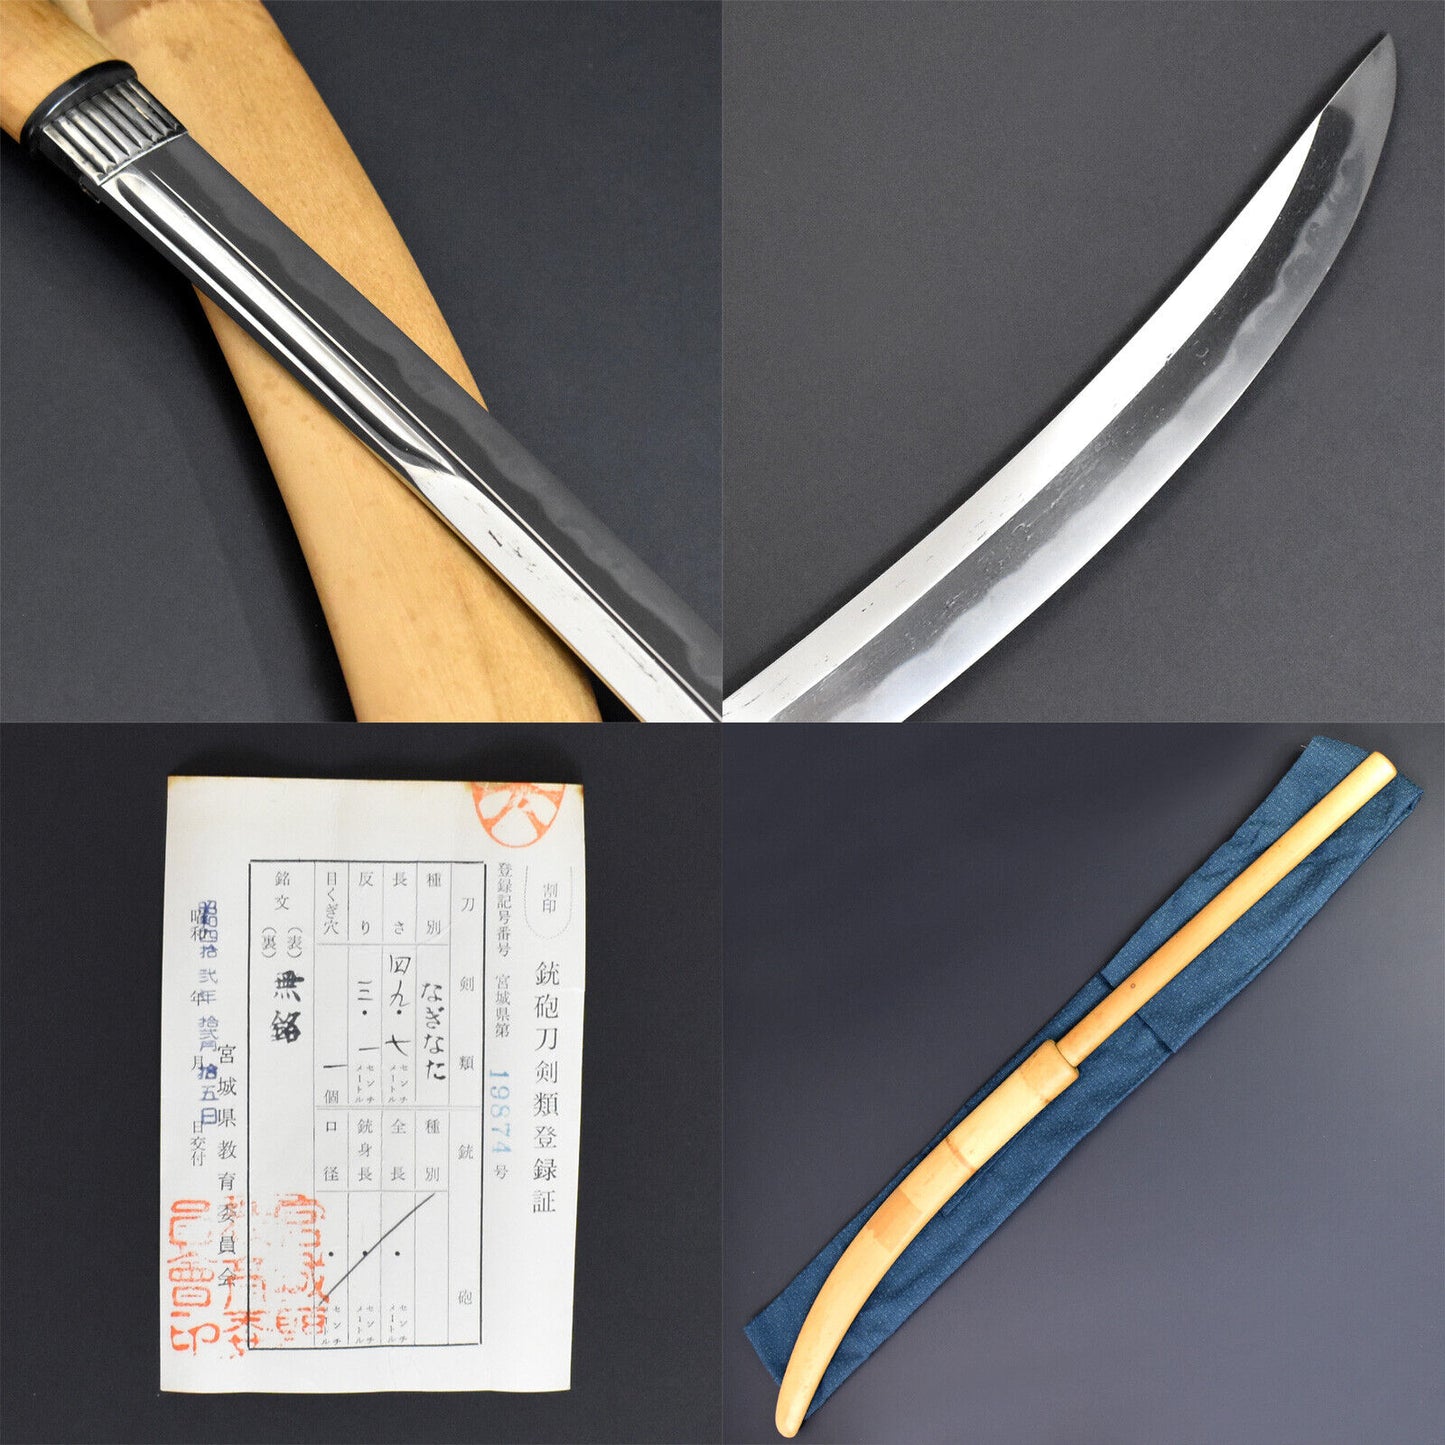 Ancient Japanese Sword Katana Tamahagane Steel Weapon Samurai History Edo Era.